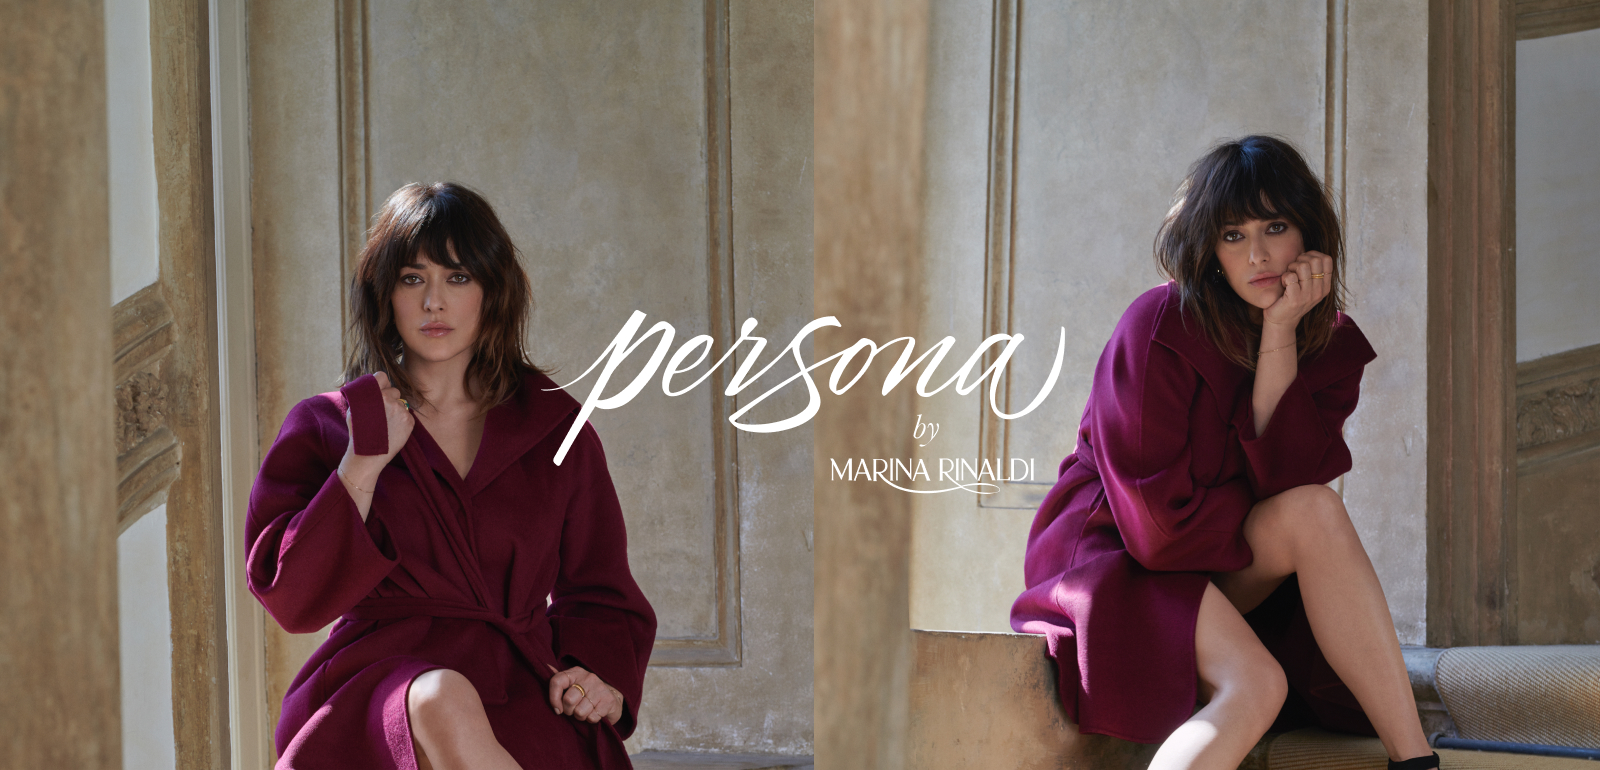 Persona by Marina Rinaldi